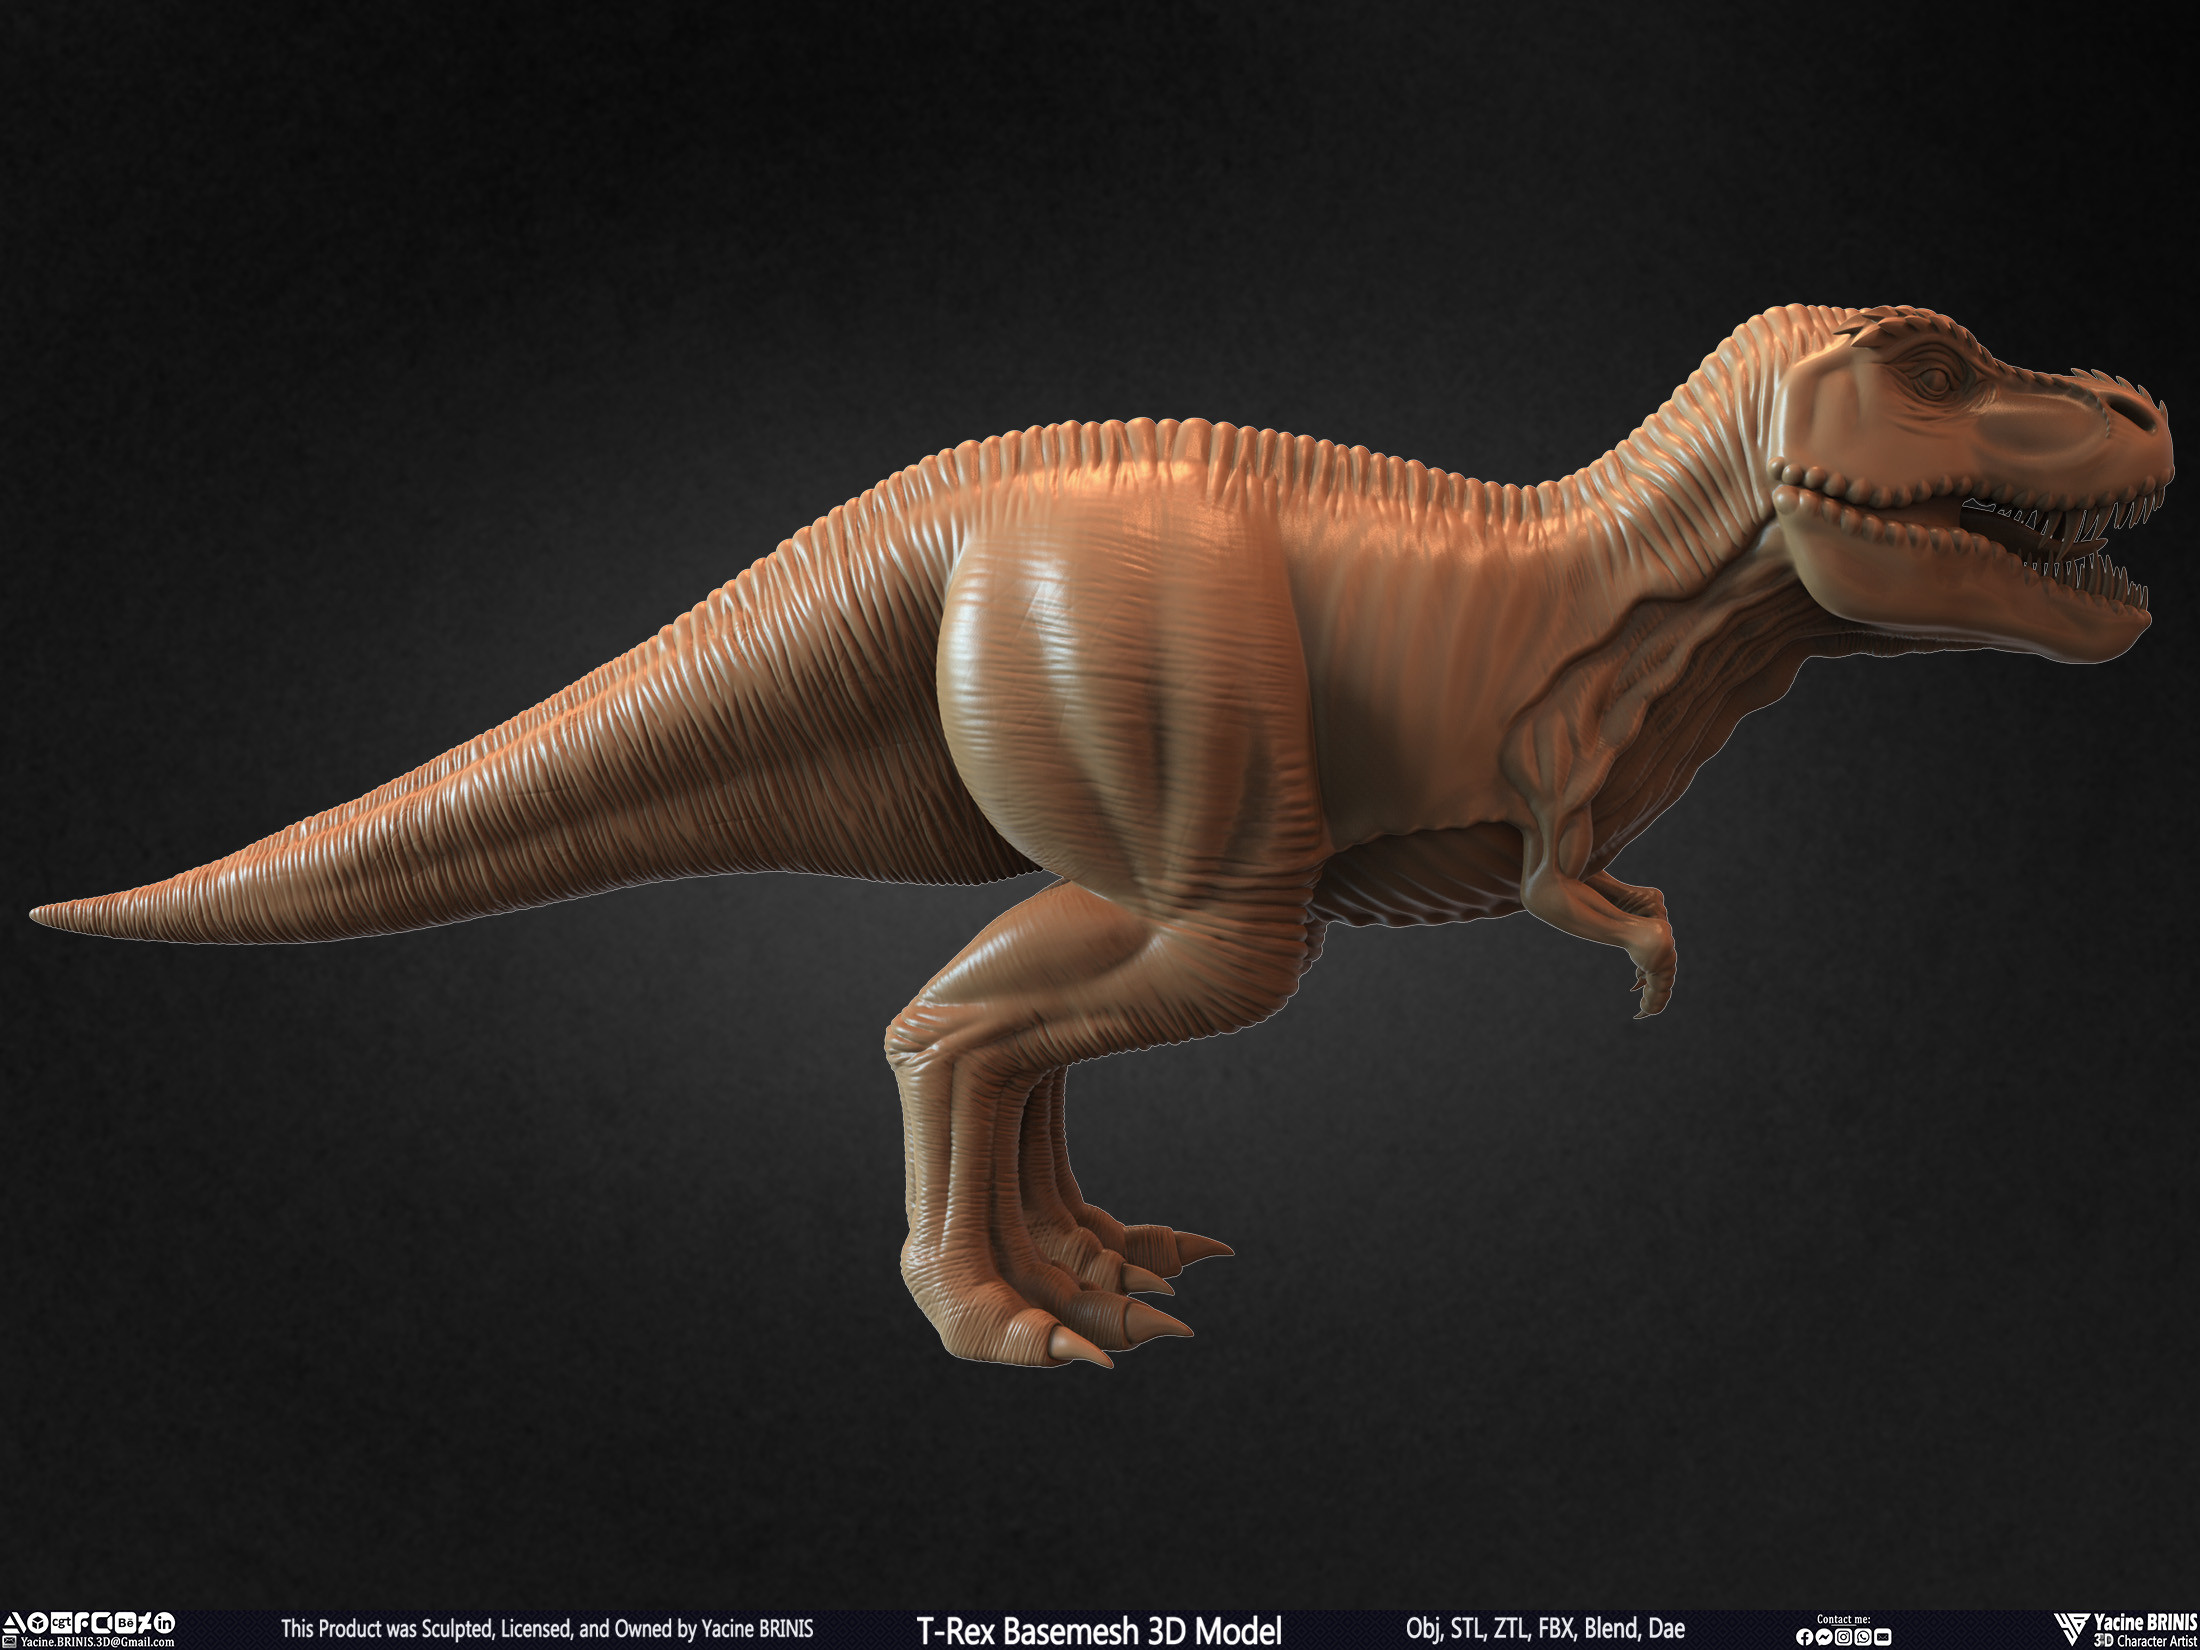 T-Rex Basemesh 3D Model (Tyrannosaurus Rex) Sculpted By Yacine BRINIS Set 006